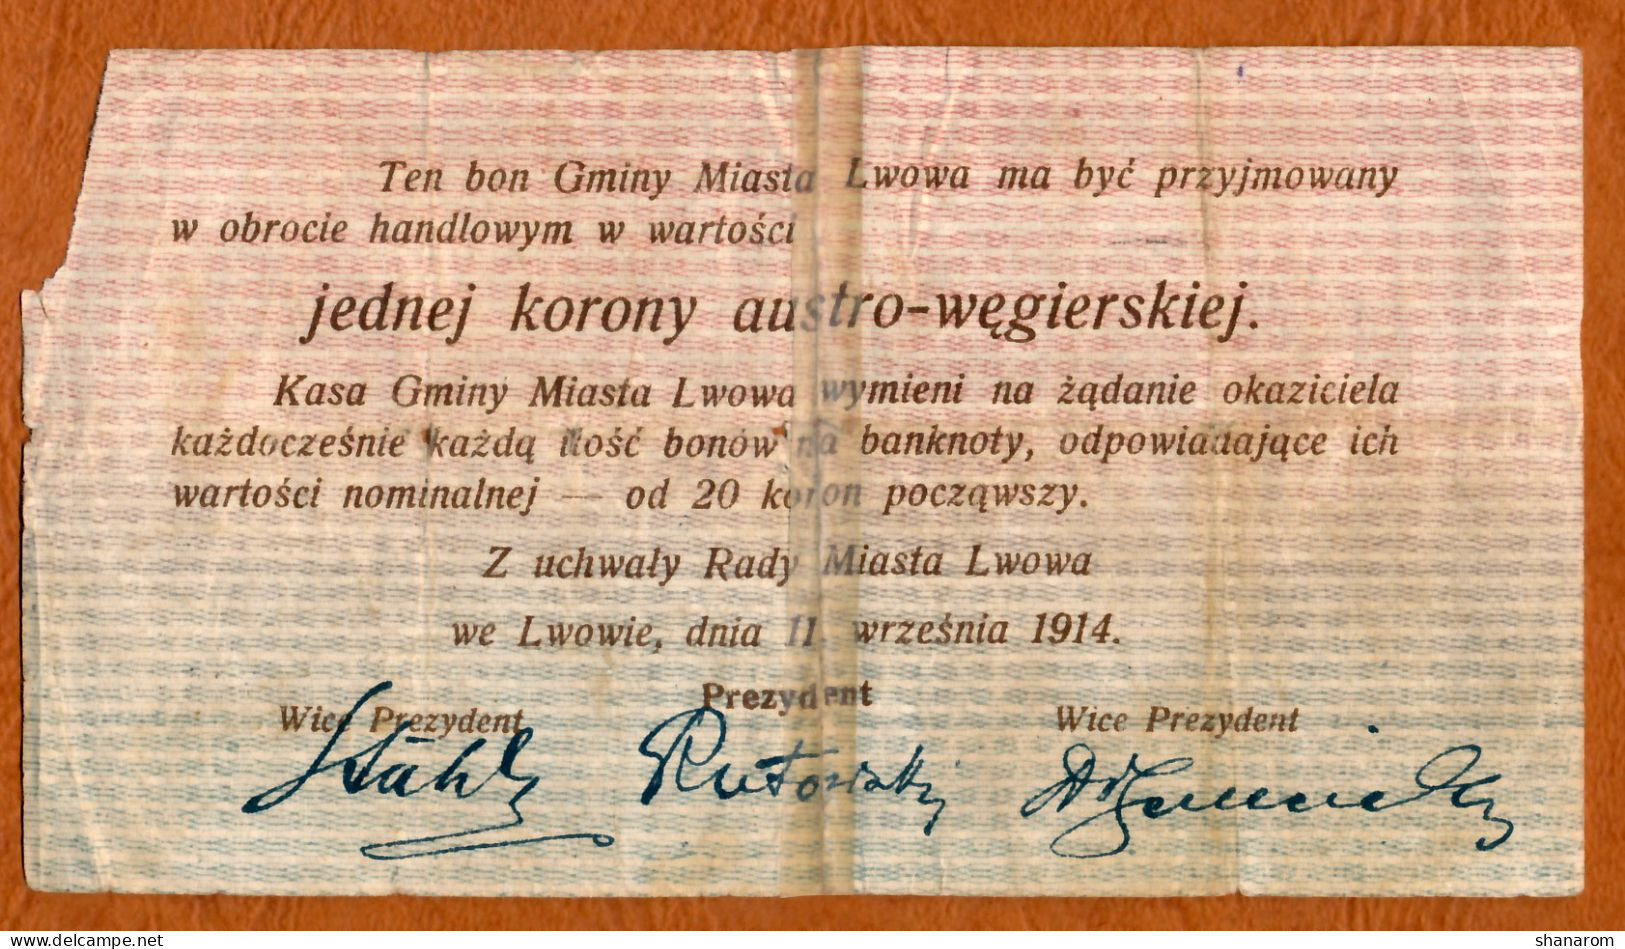 1914 // POLOGNE // JEDNA KORONA - Polen